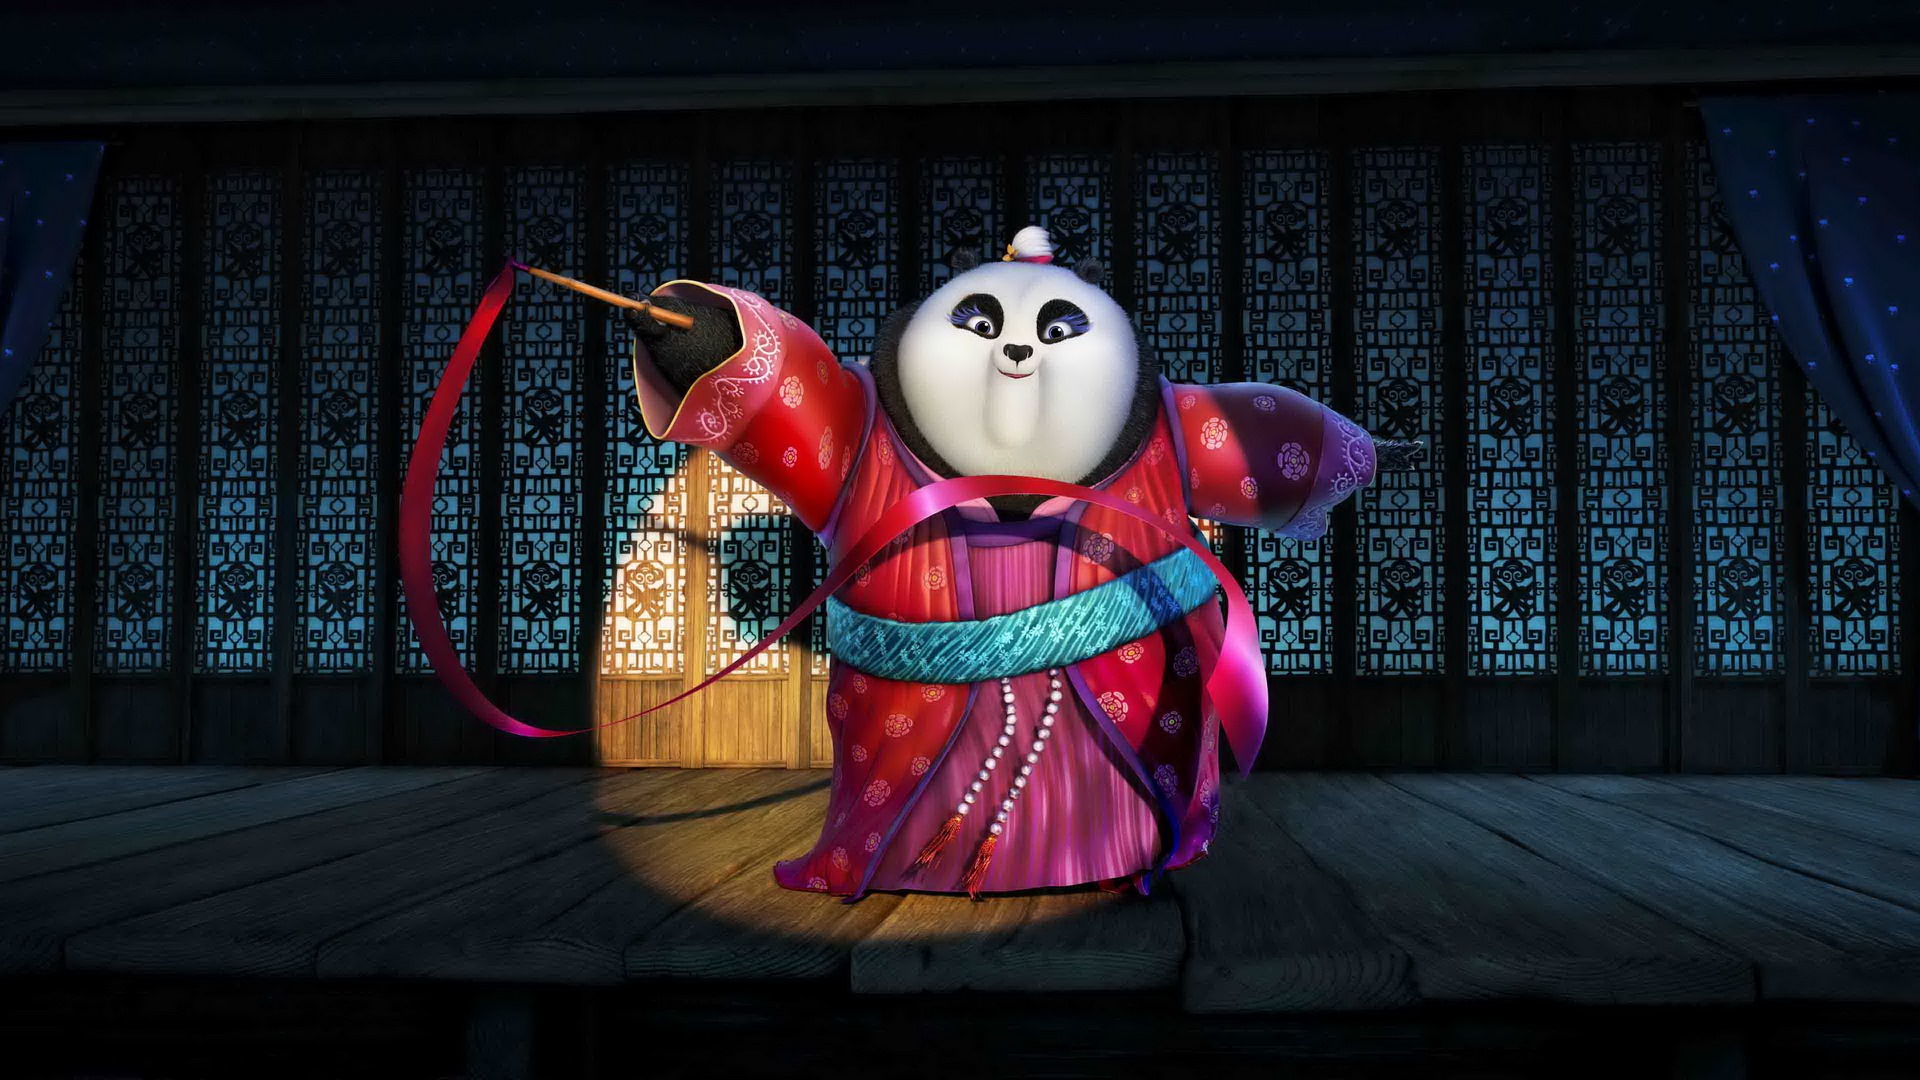 Kung Fu Panda 3, fondos de pantalla de alta definición de películas #10 - 1920x1080